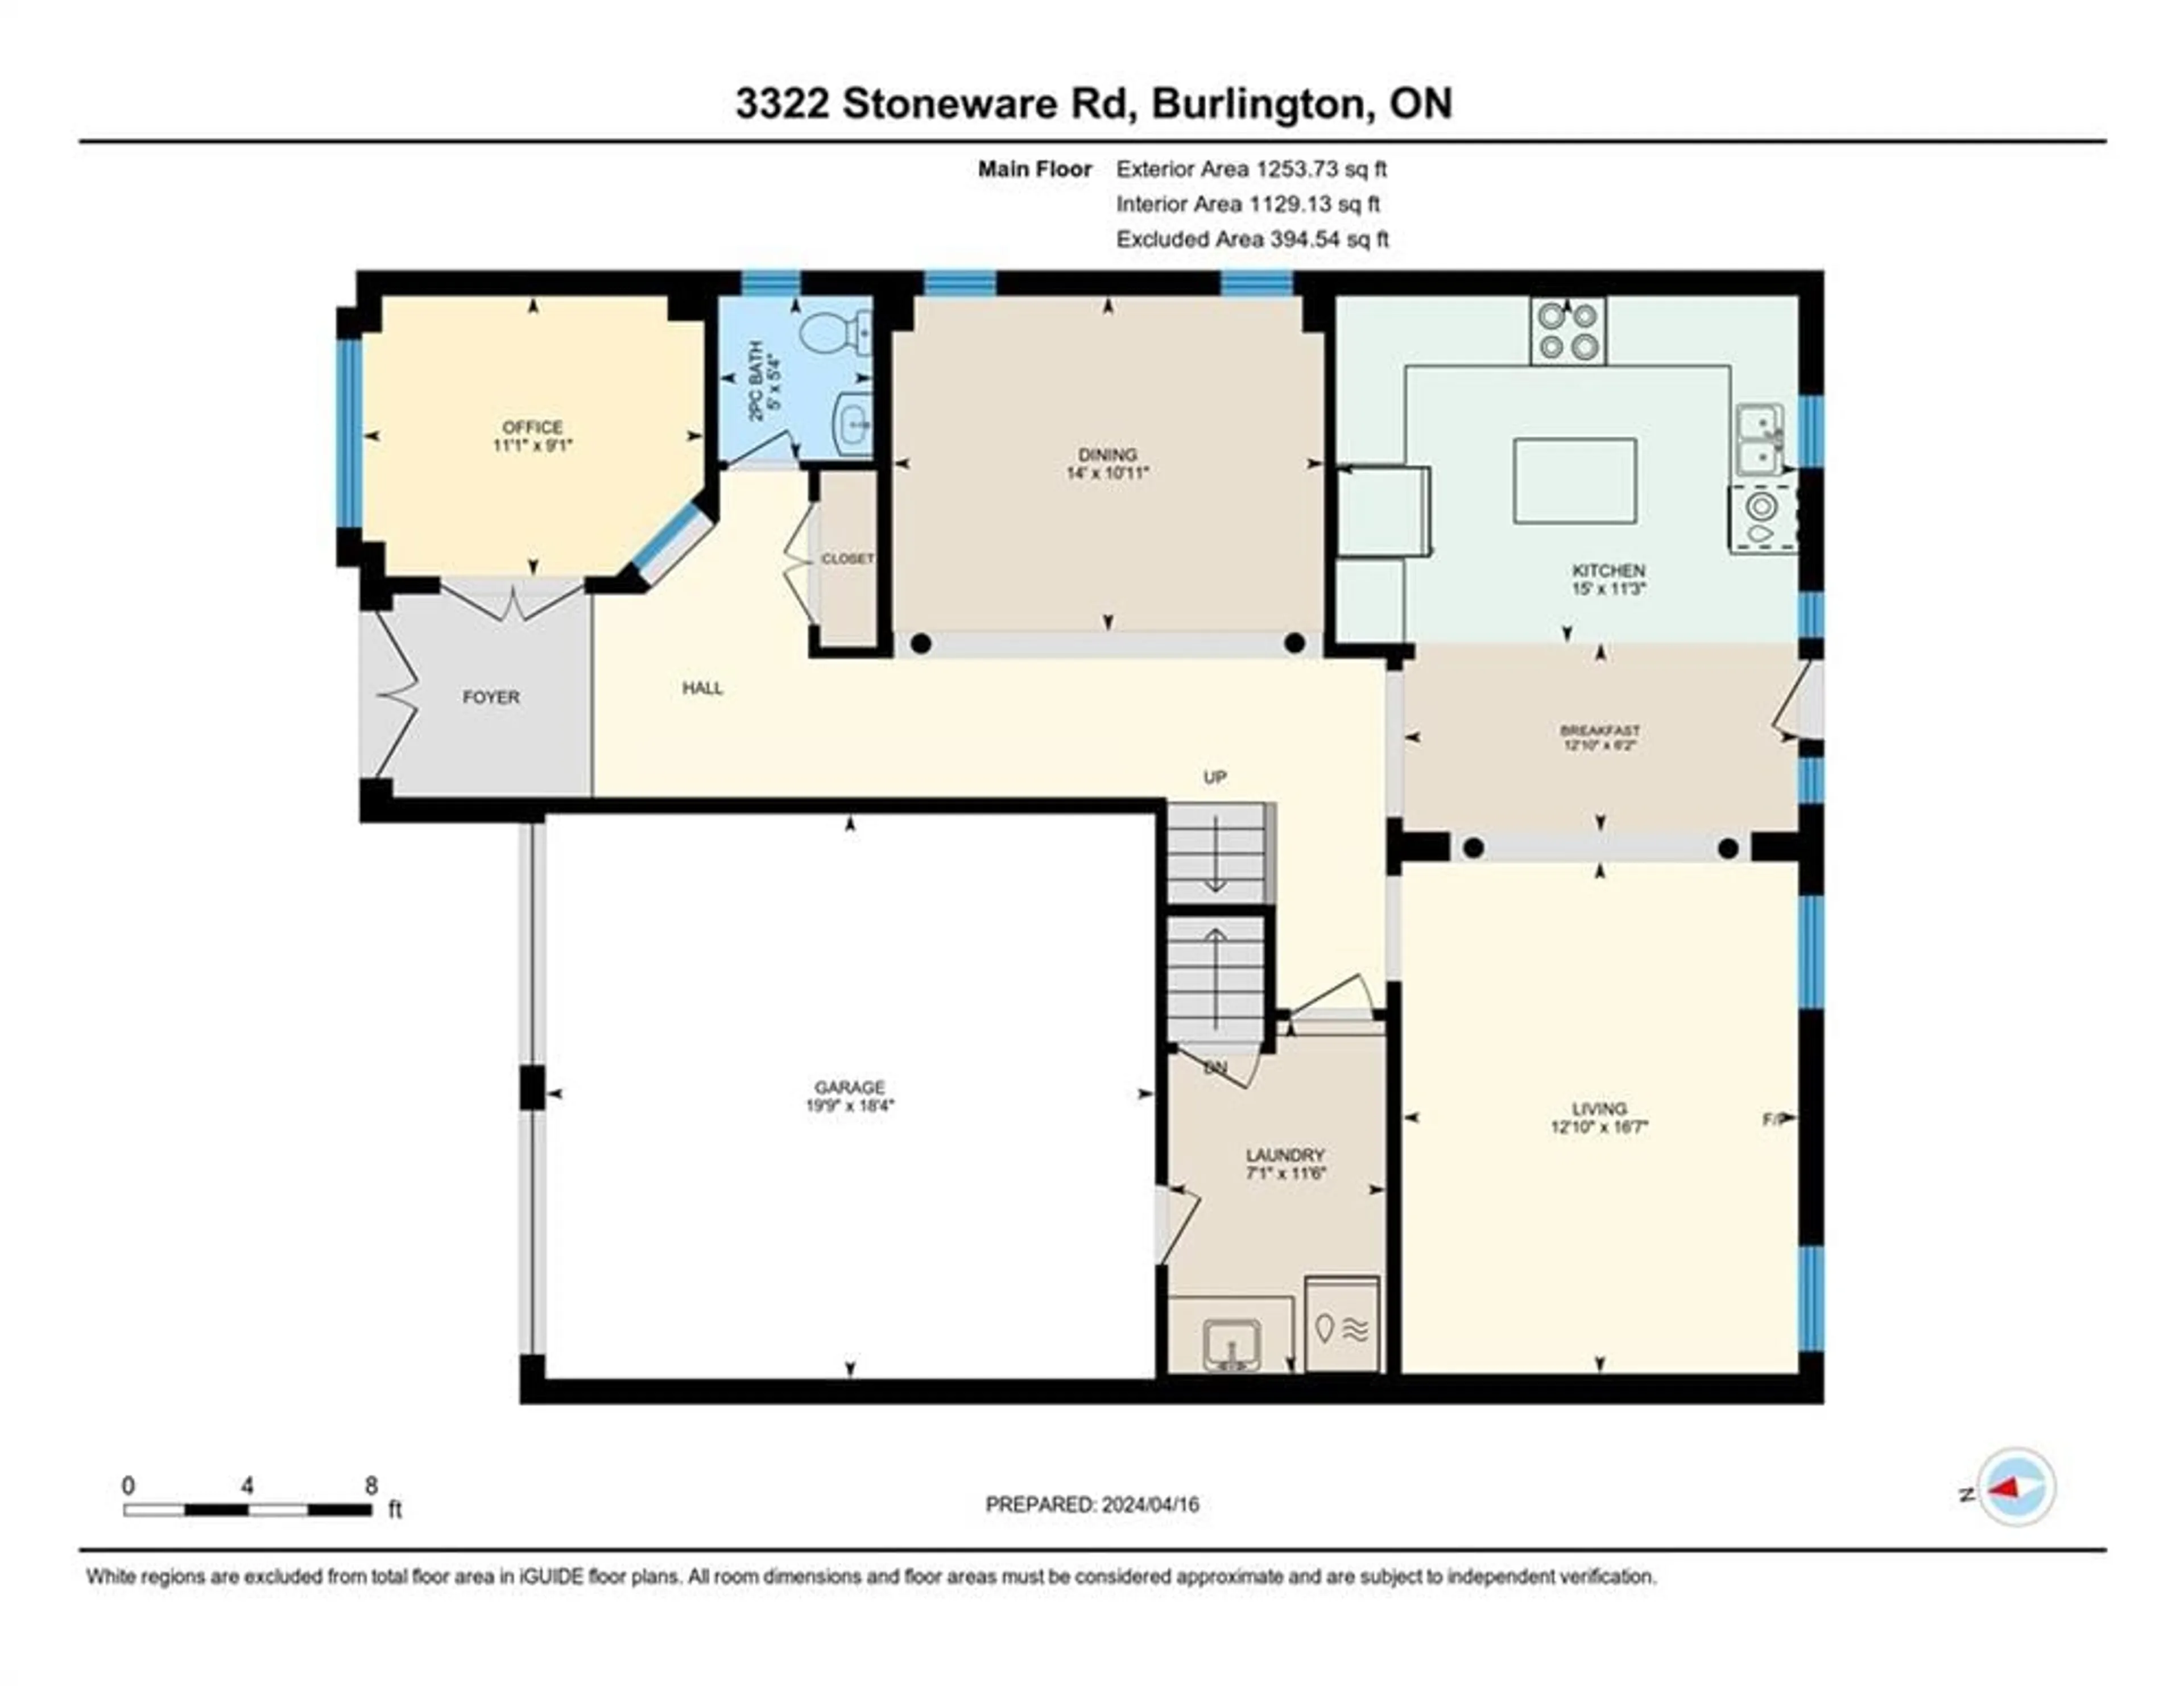 Floor plan for 3322 Stoneware Rd, Burlington Ontario L7M 0K3